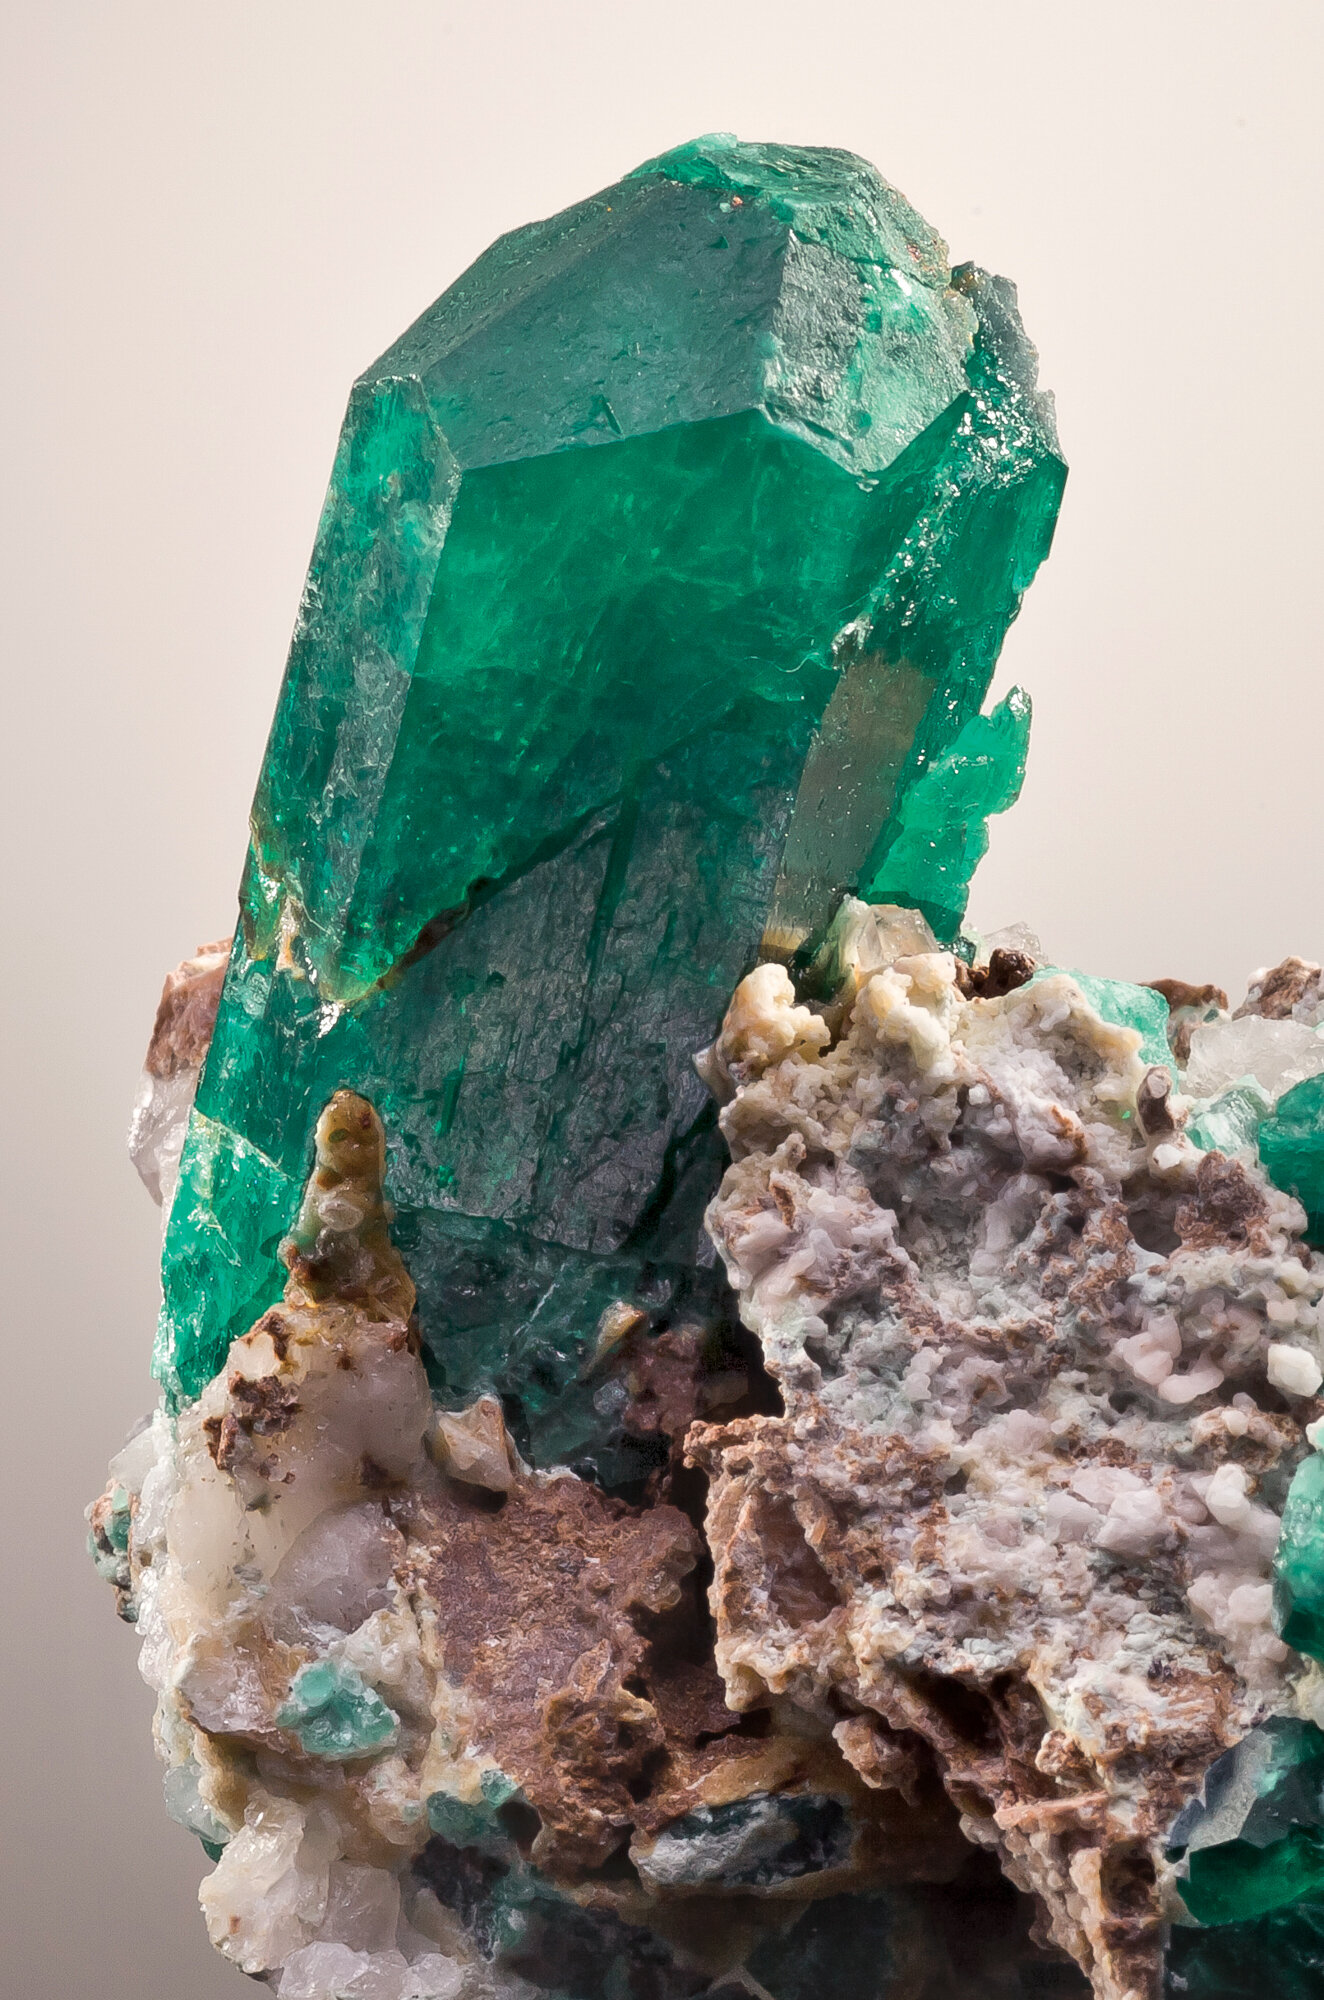  Emerald on matrix, 4.5 cm, from Daftar, Tashiku’ergan County, Kashi Prefecture, Xinjiang Uyghur Autonomous Region, China. 